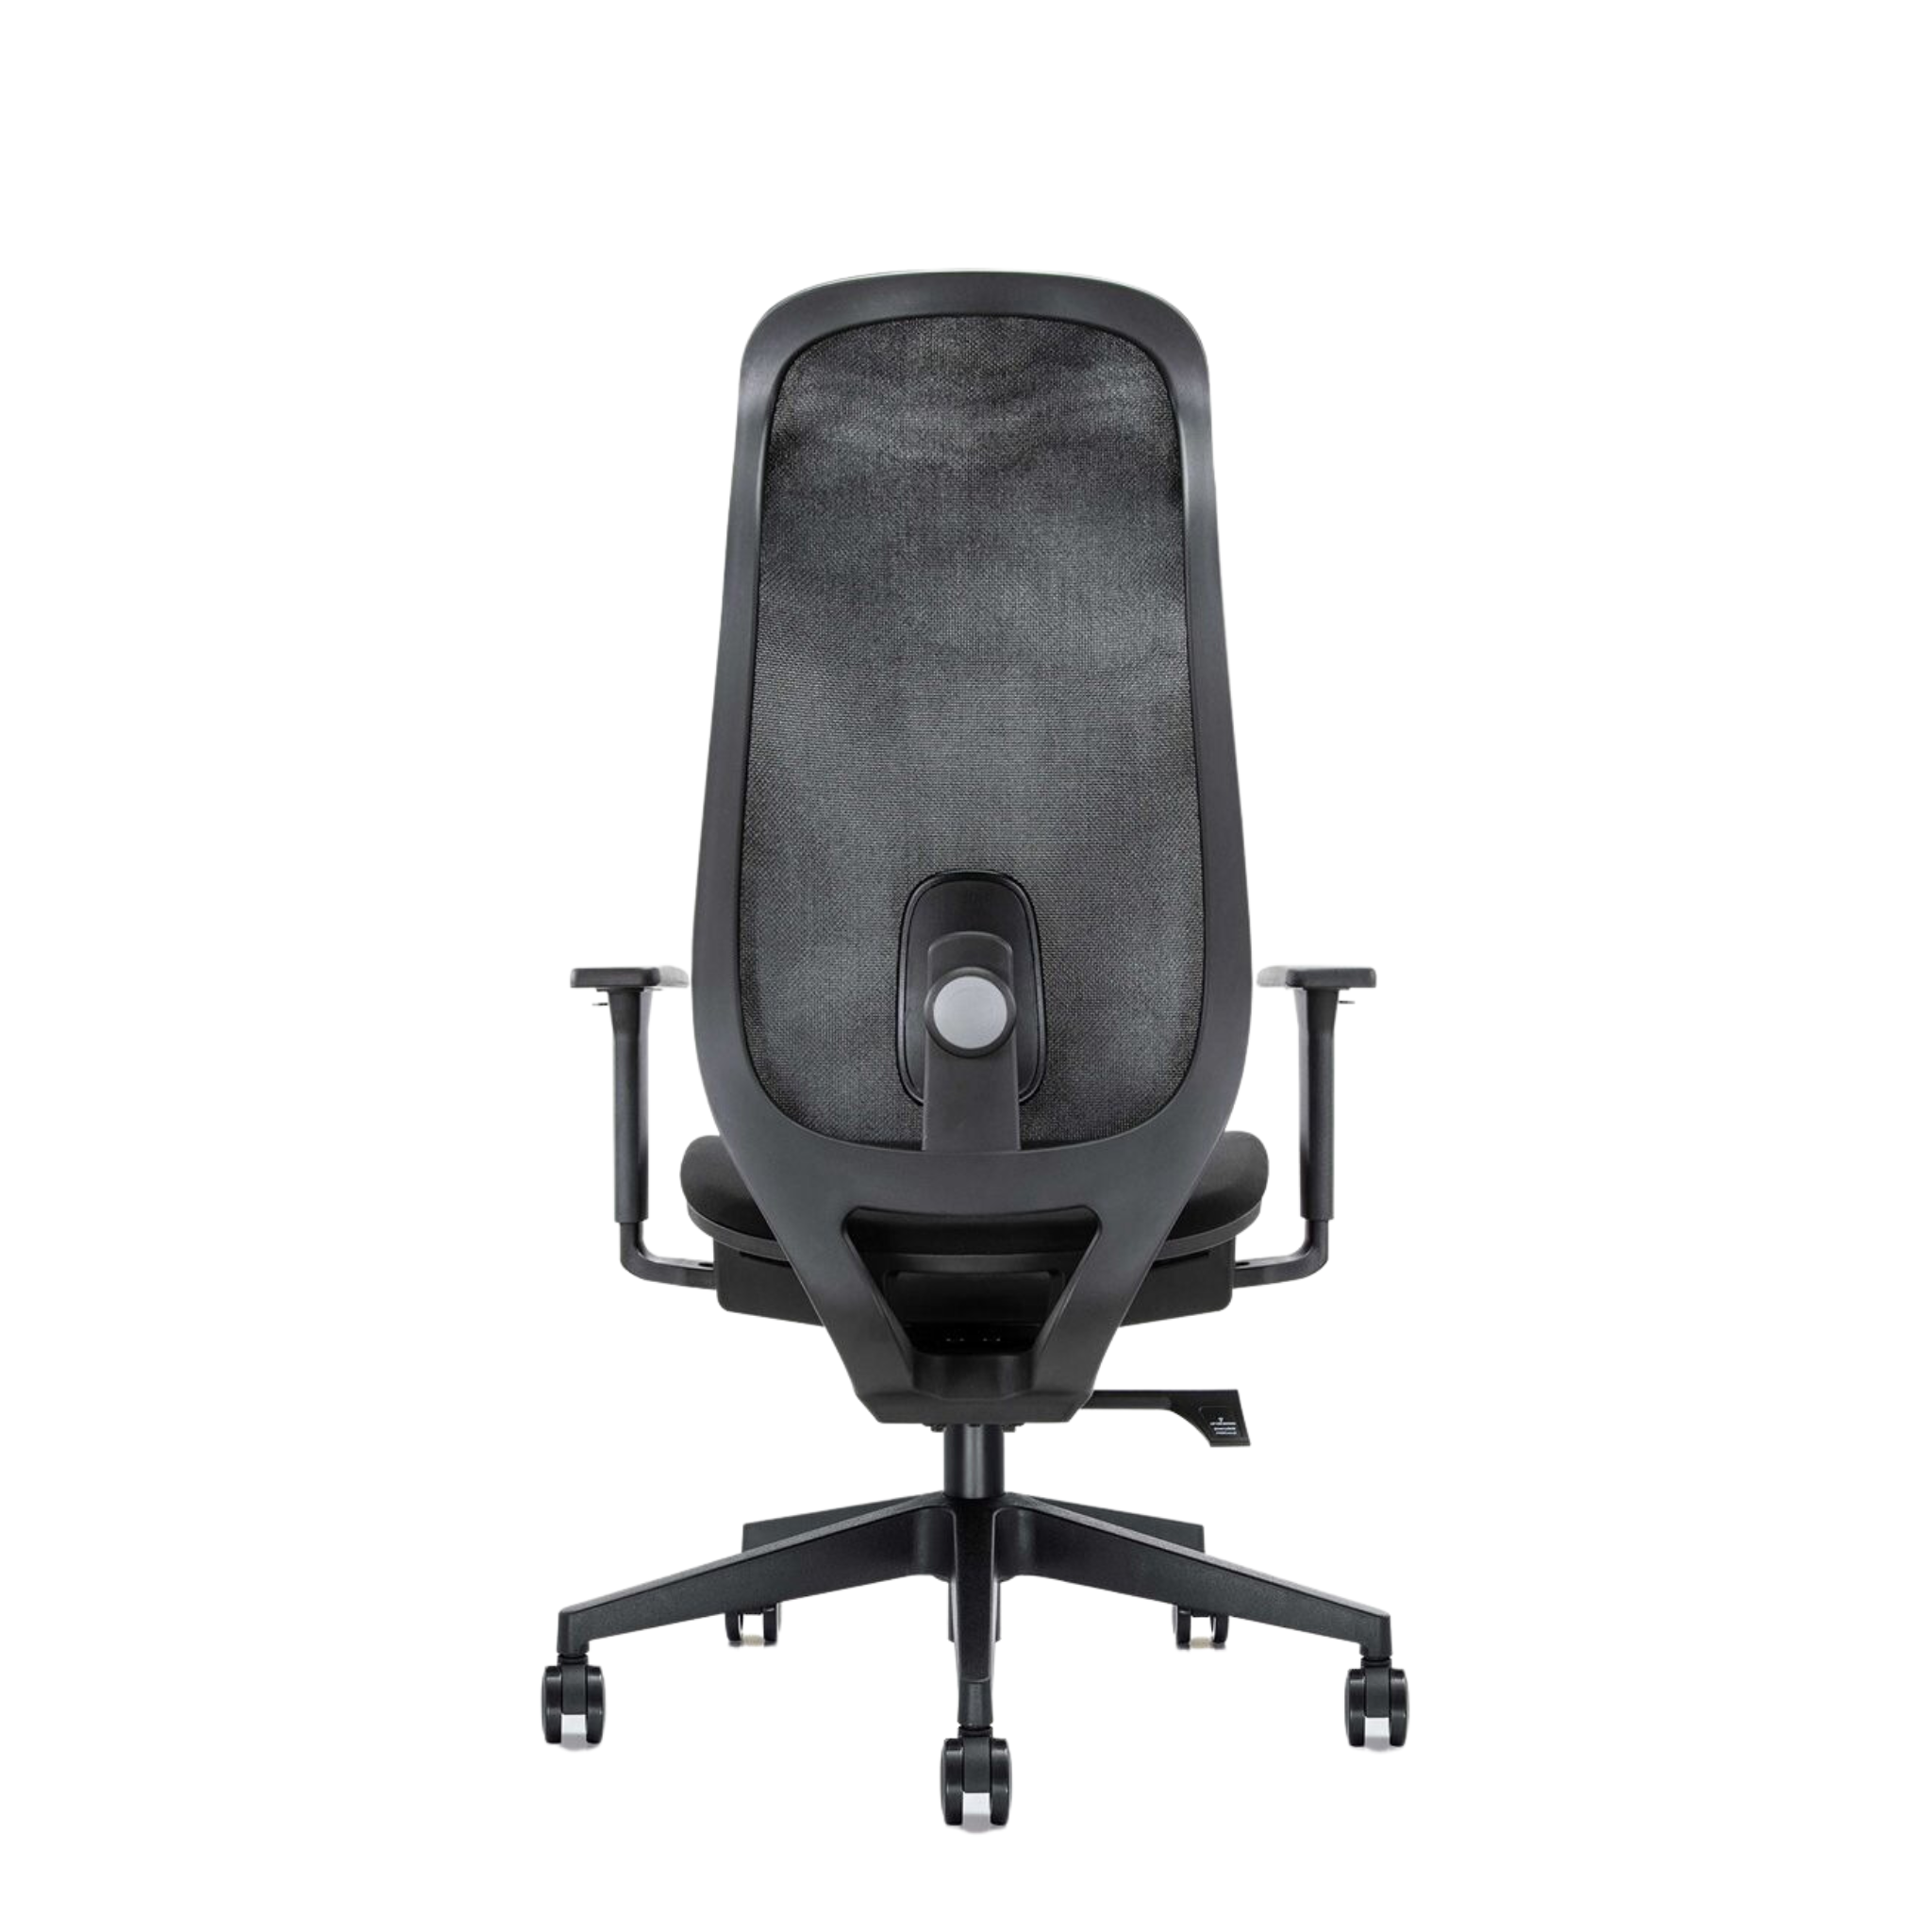 The Cygnet Chair